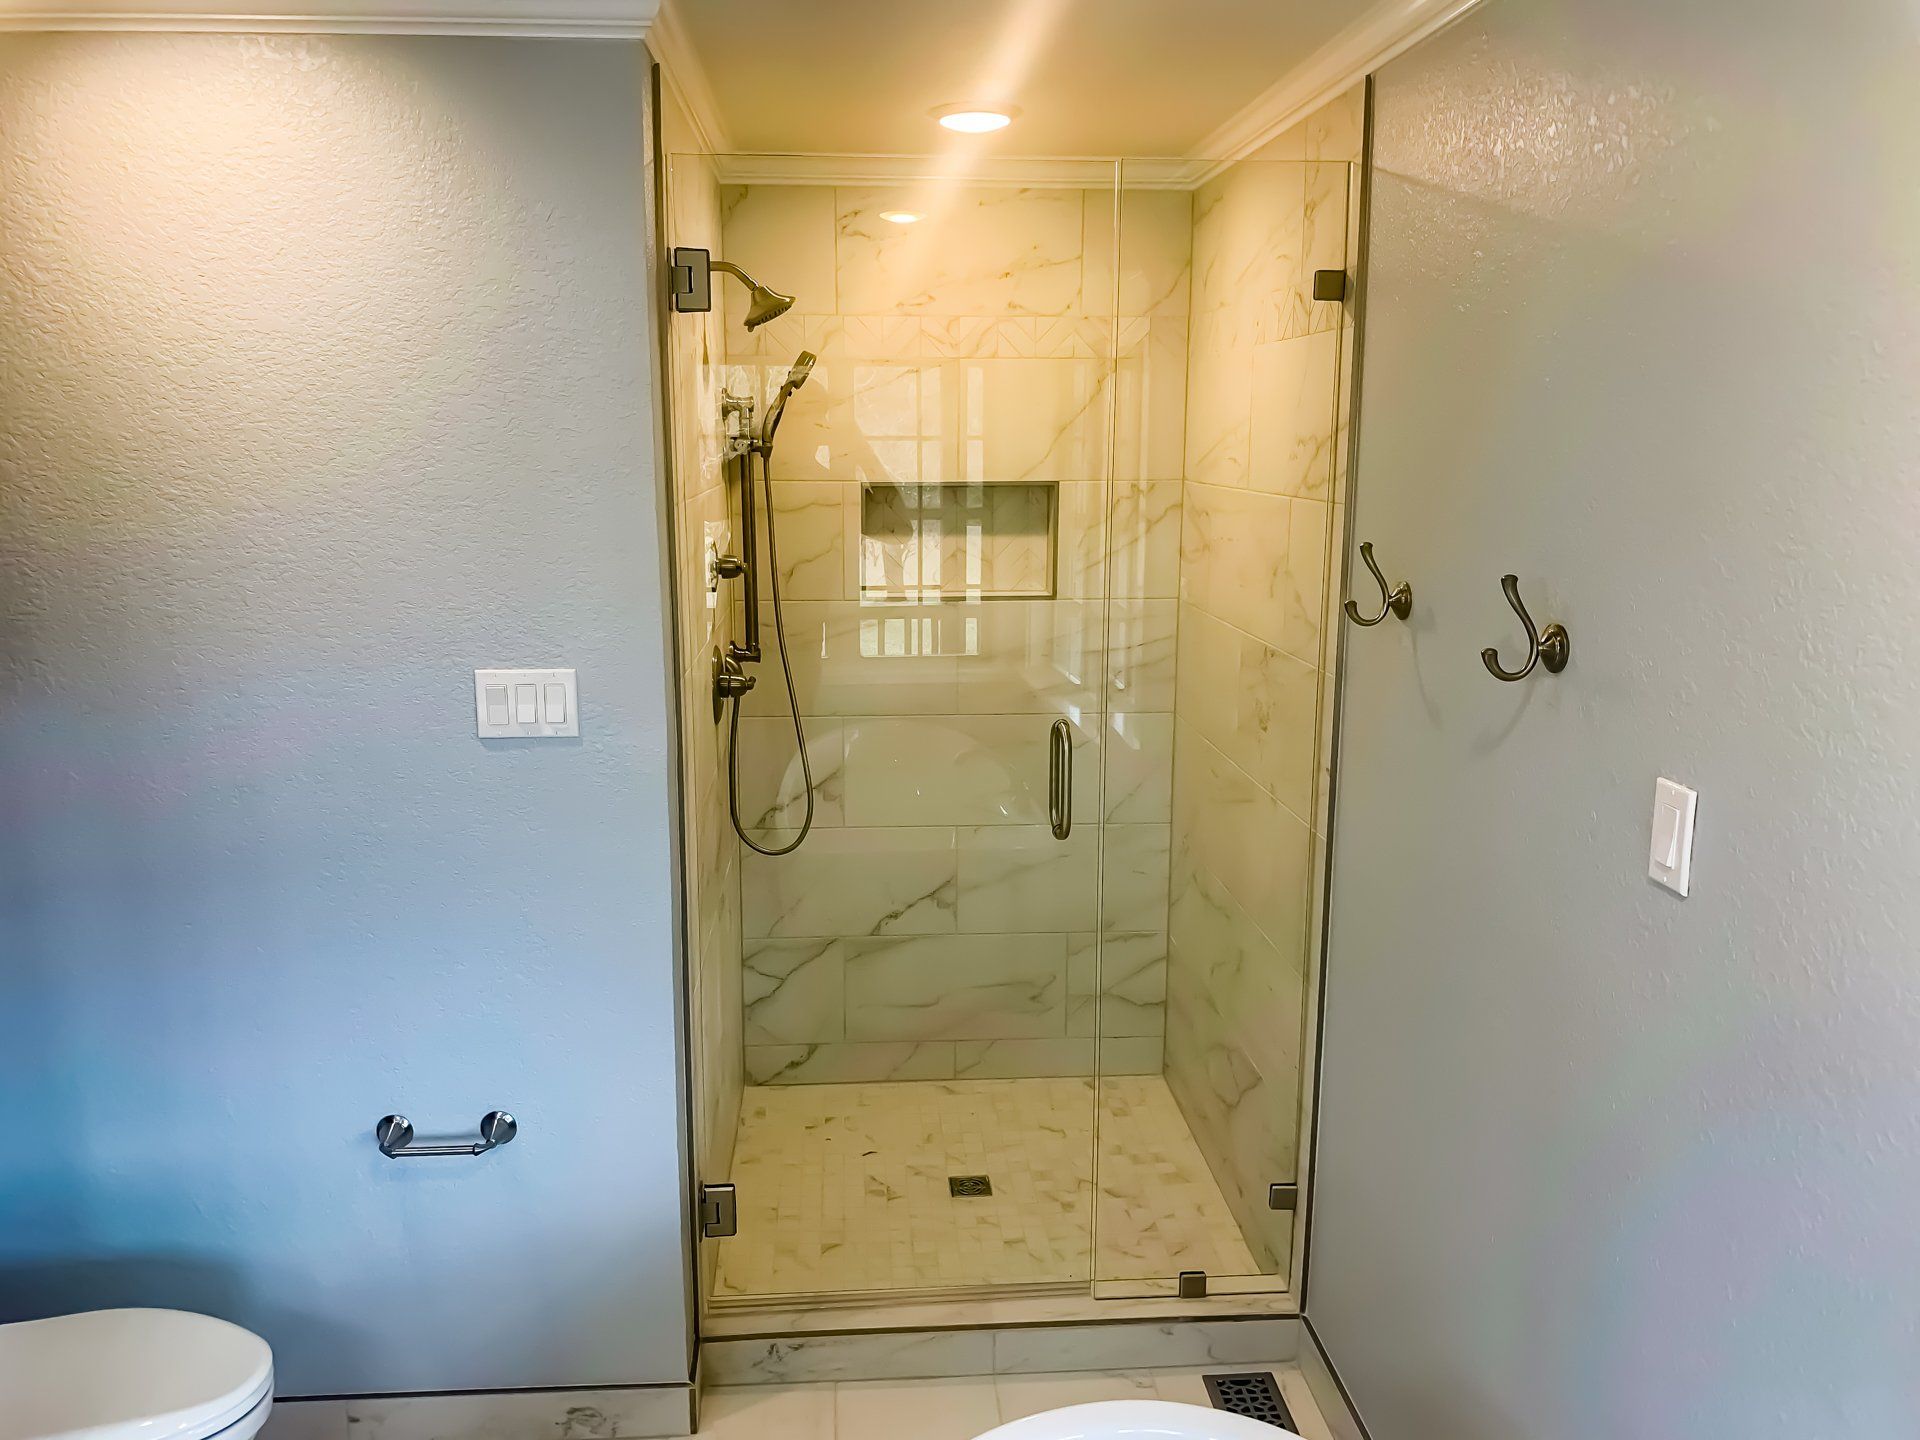 Hot Springs Master Bathroom Remodel with shower